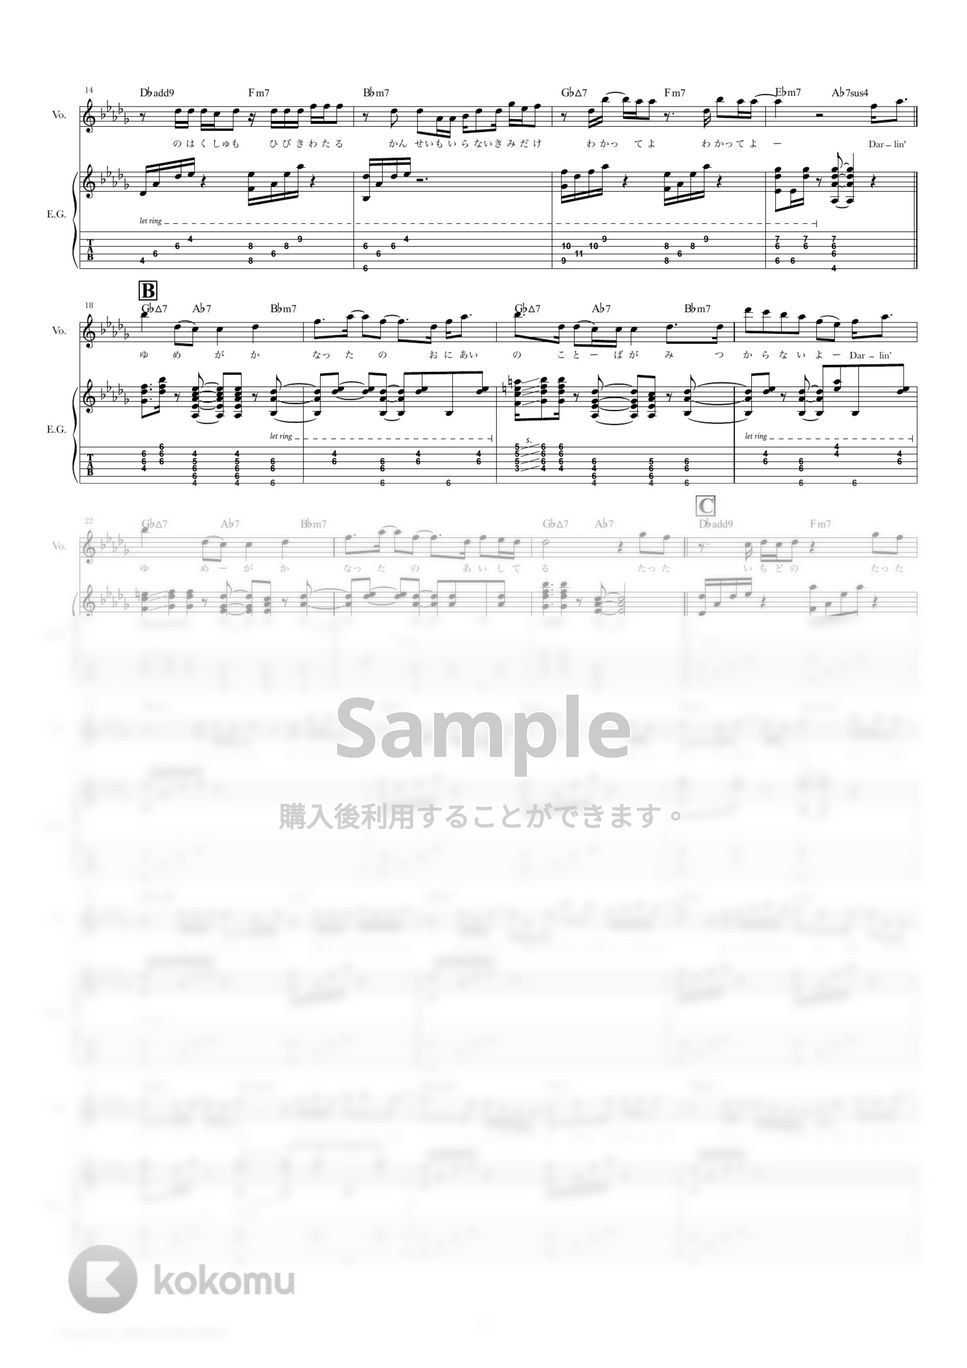 Aimer - カタオモイ (ギタースコア・歌詞・コード付き) by TRIAD GUITAR SCHOOL